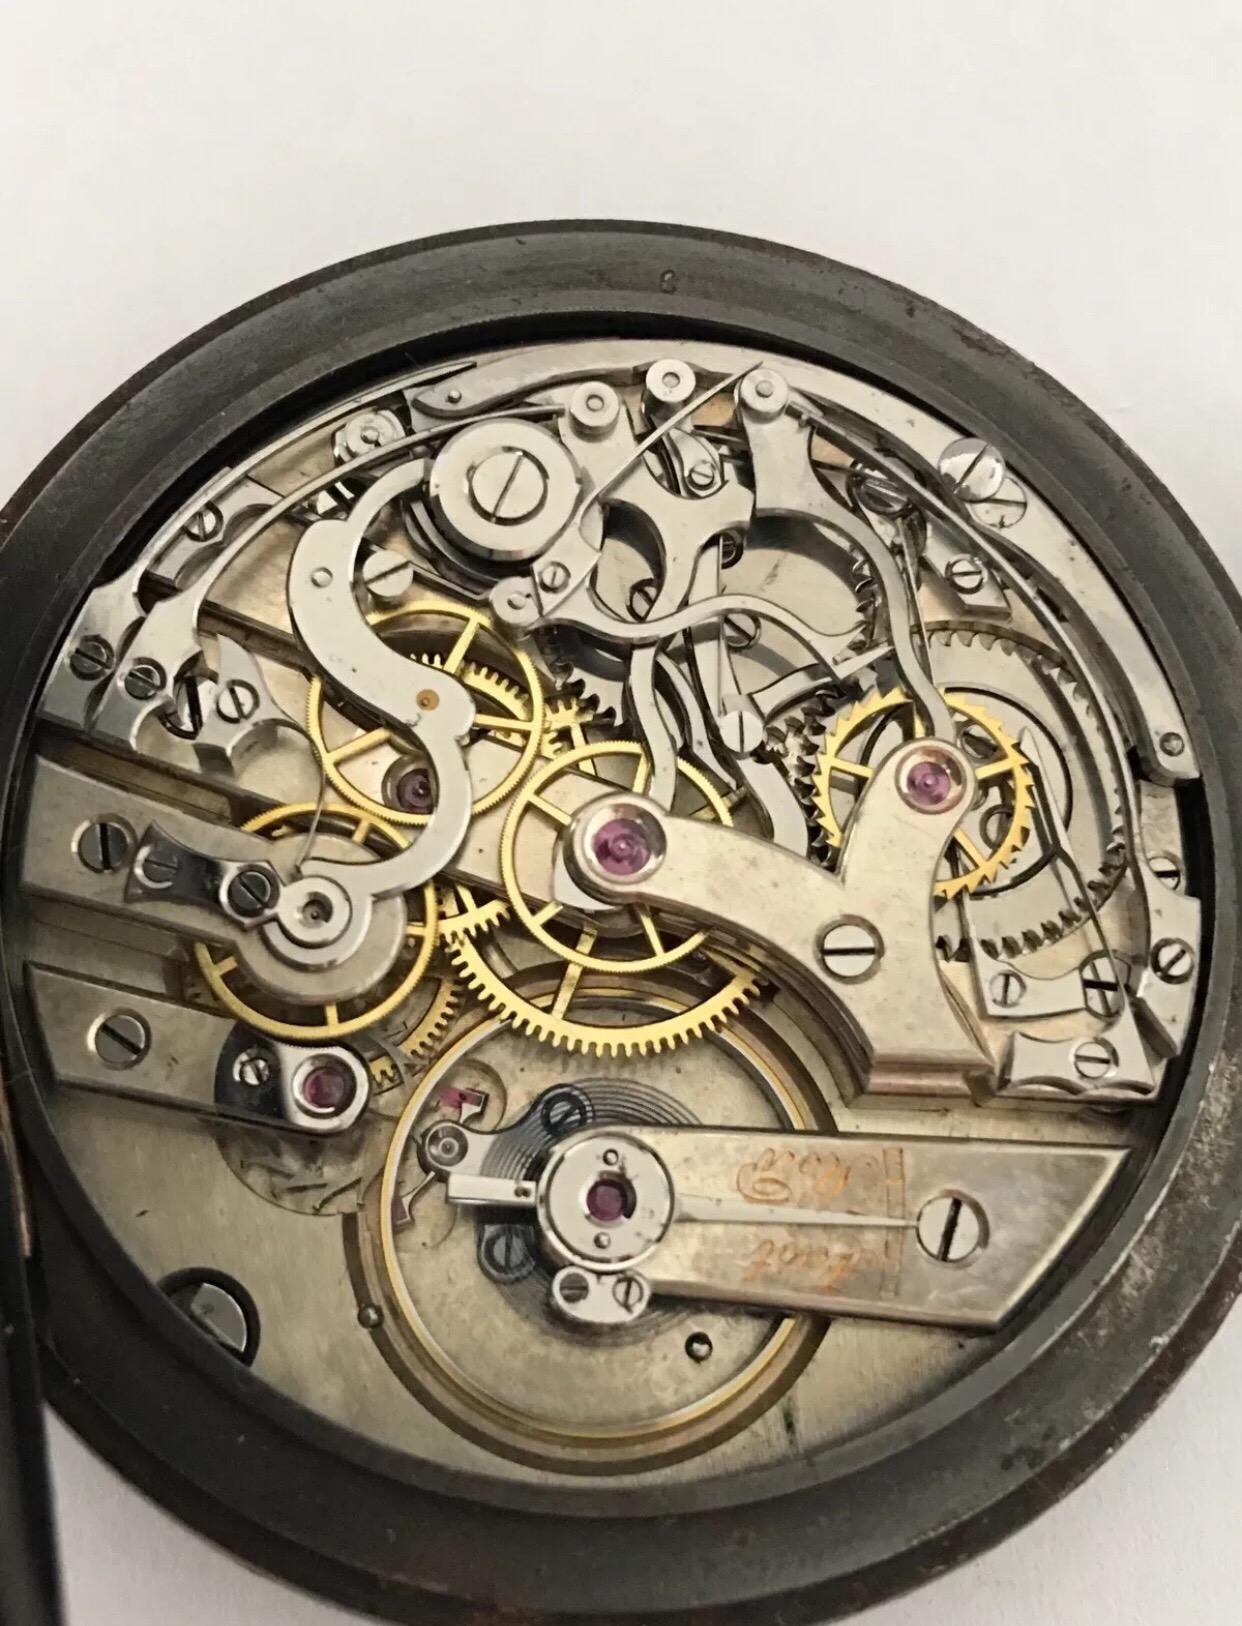 centre seconds chronograph pocket watch